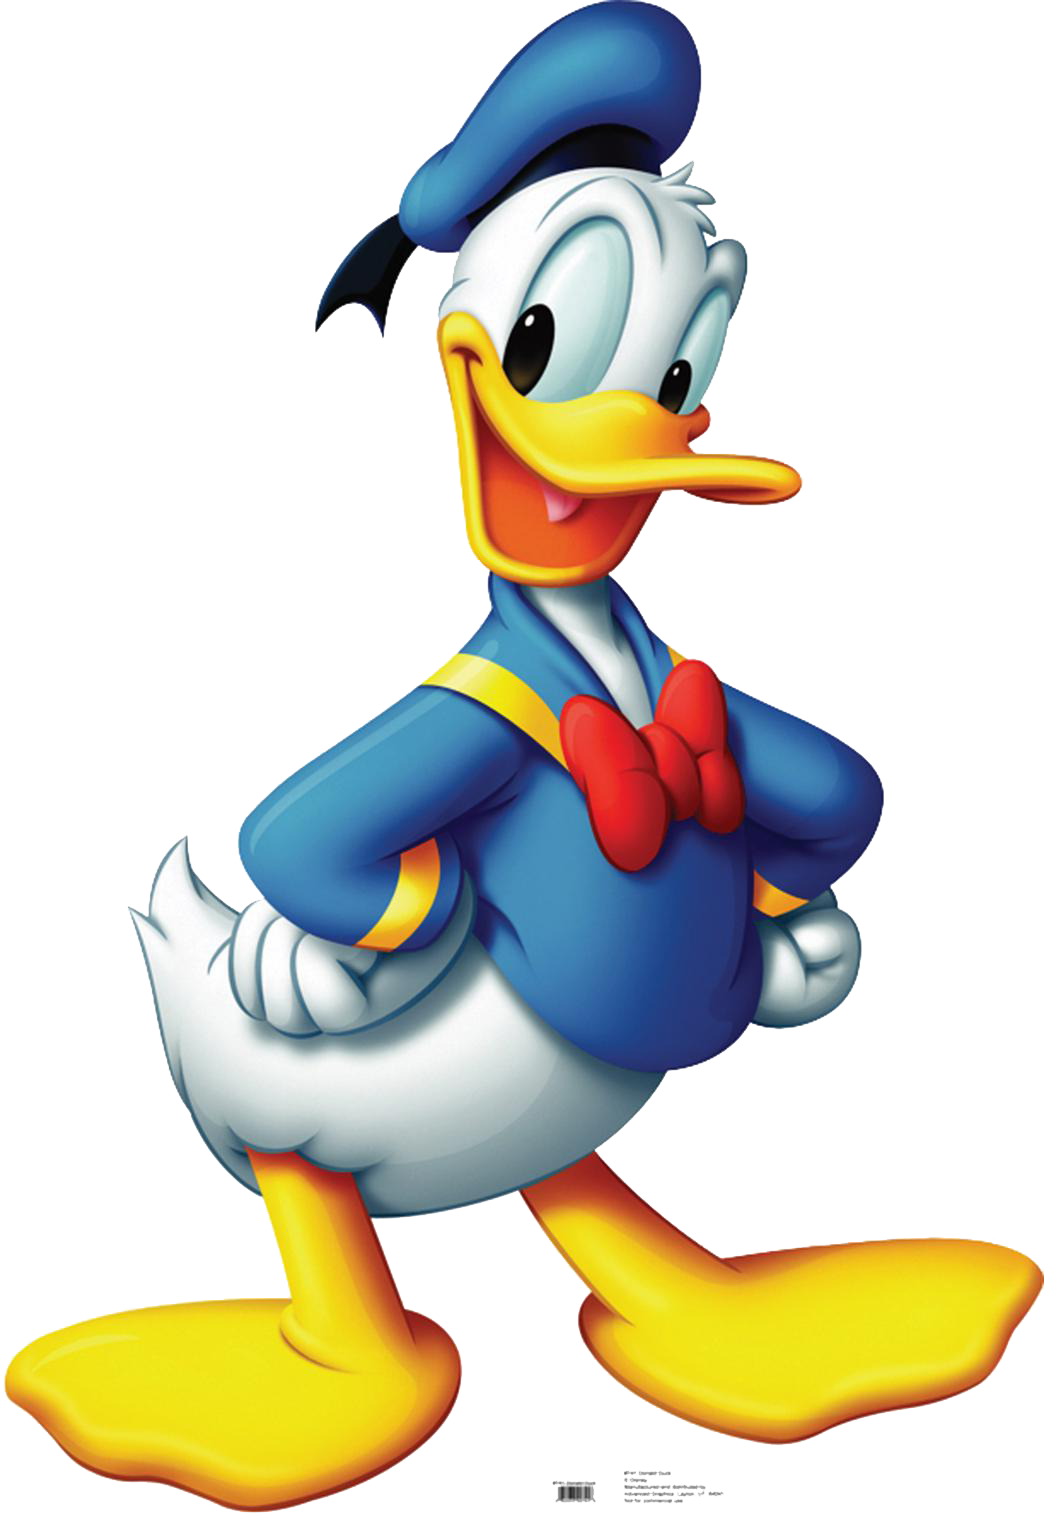 Download Donald Duck Image HQ PNG Image | FreePNGImg